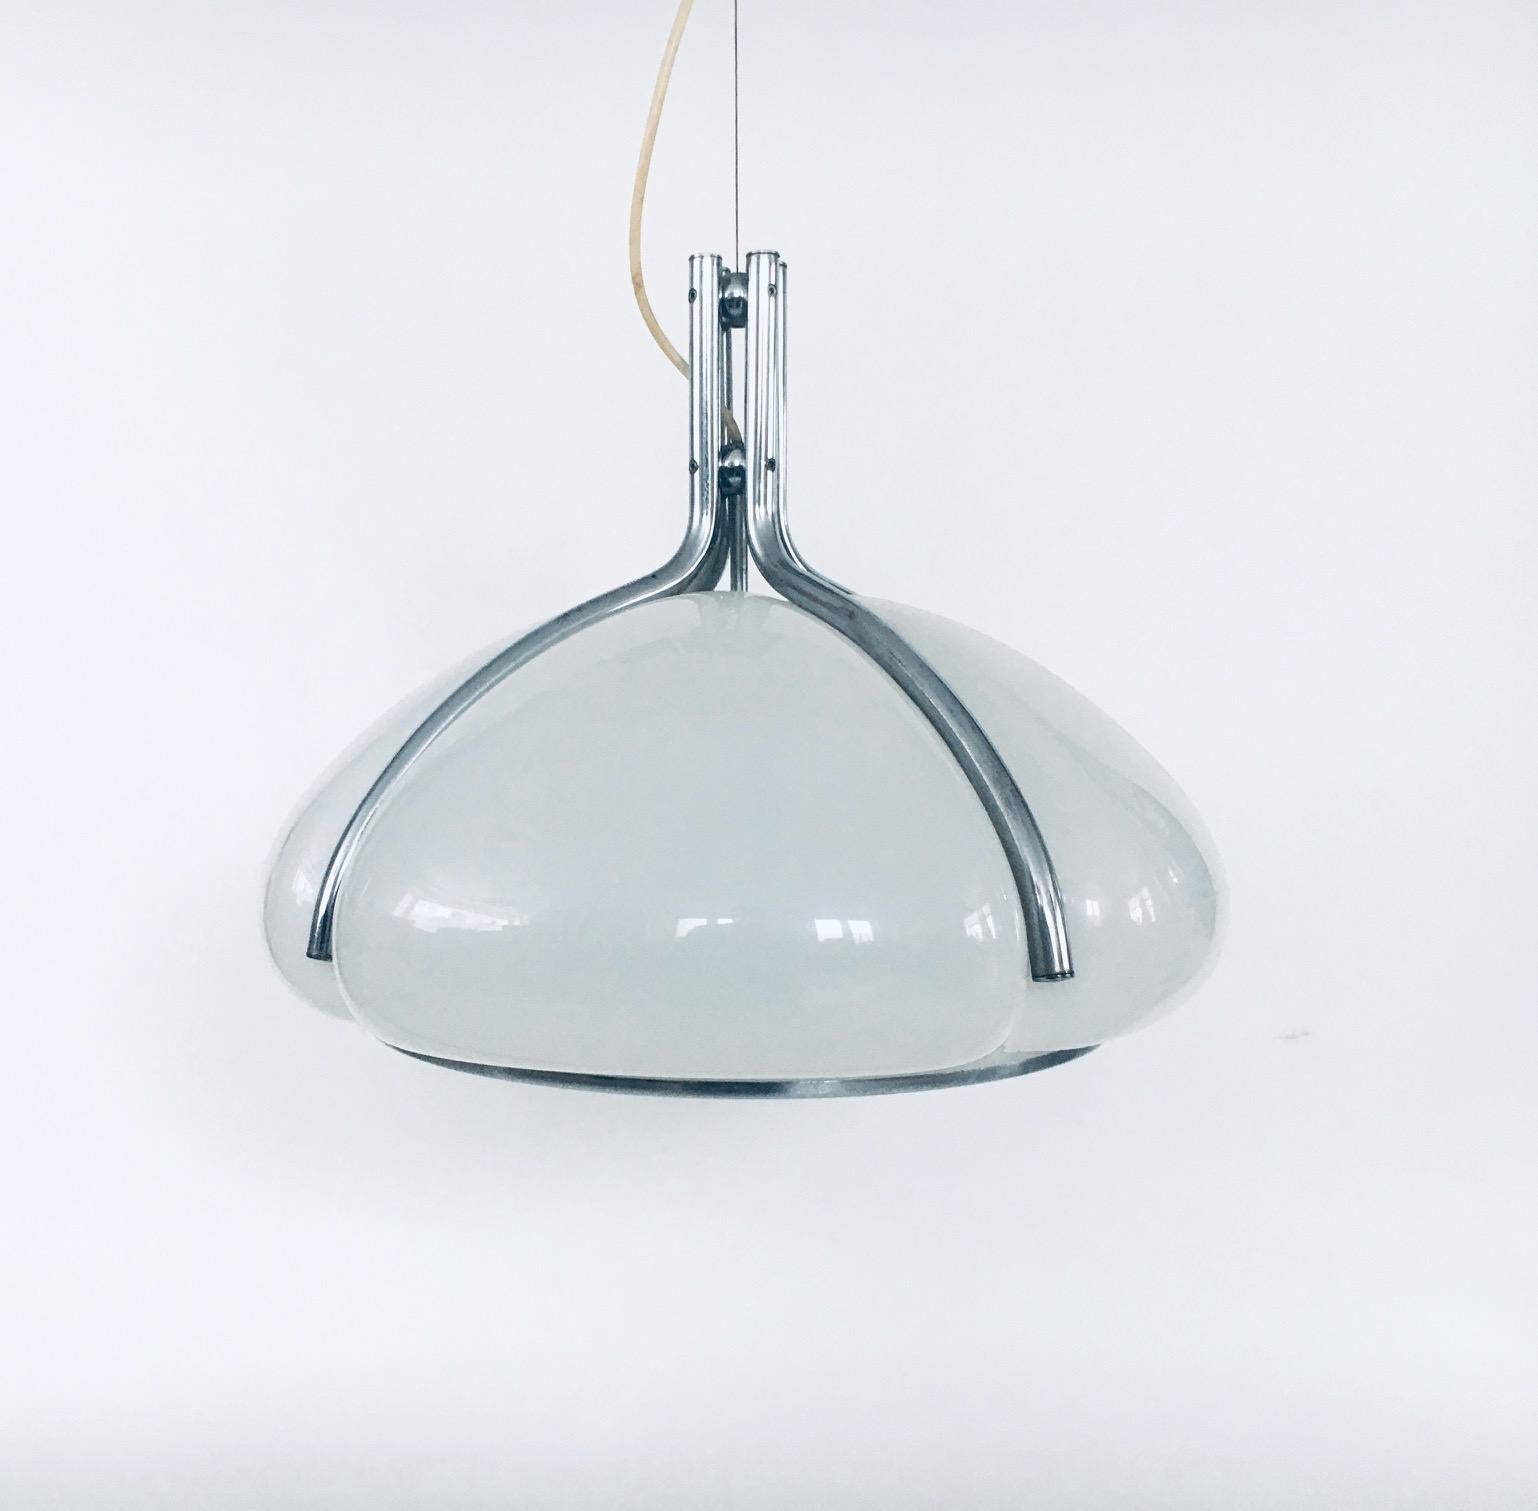 Mid-Century Modern Quadrifoglio Pendant Lamp by Gae Aulenti for Guzzini, Italy 1970's For Sale